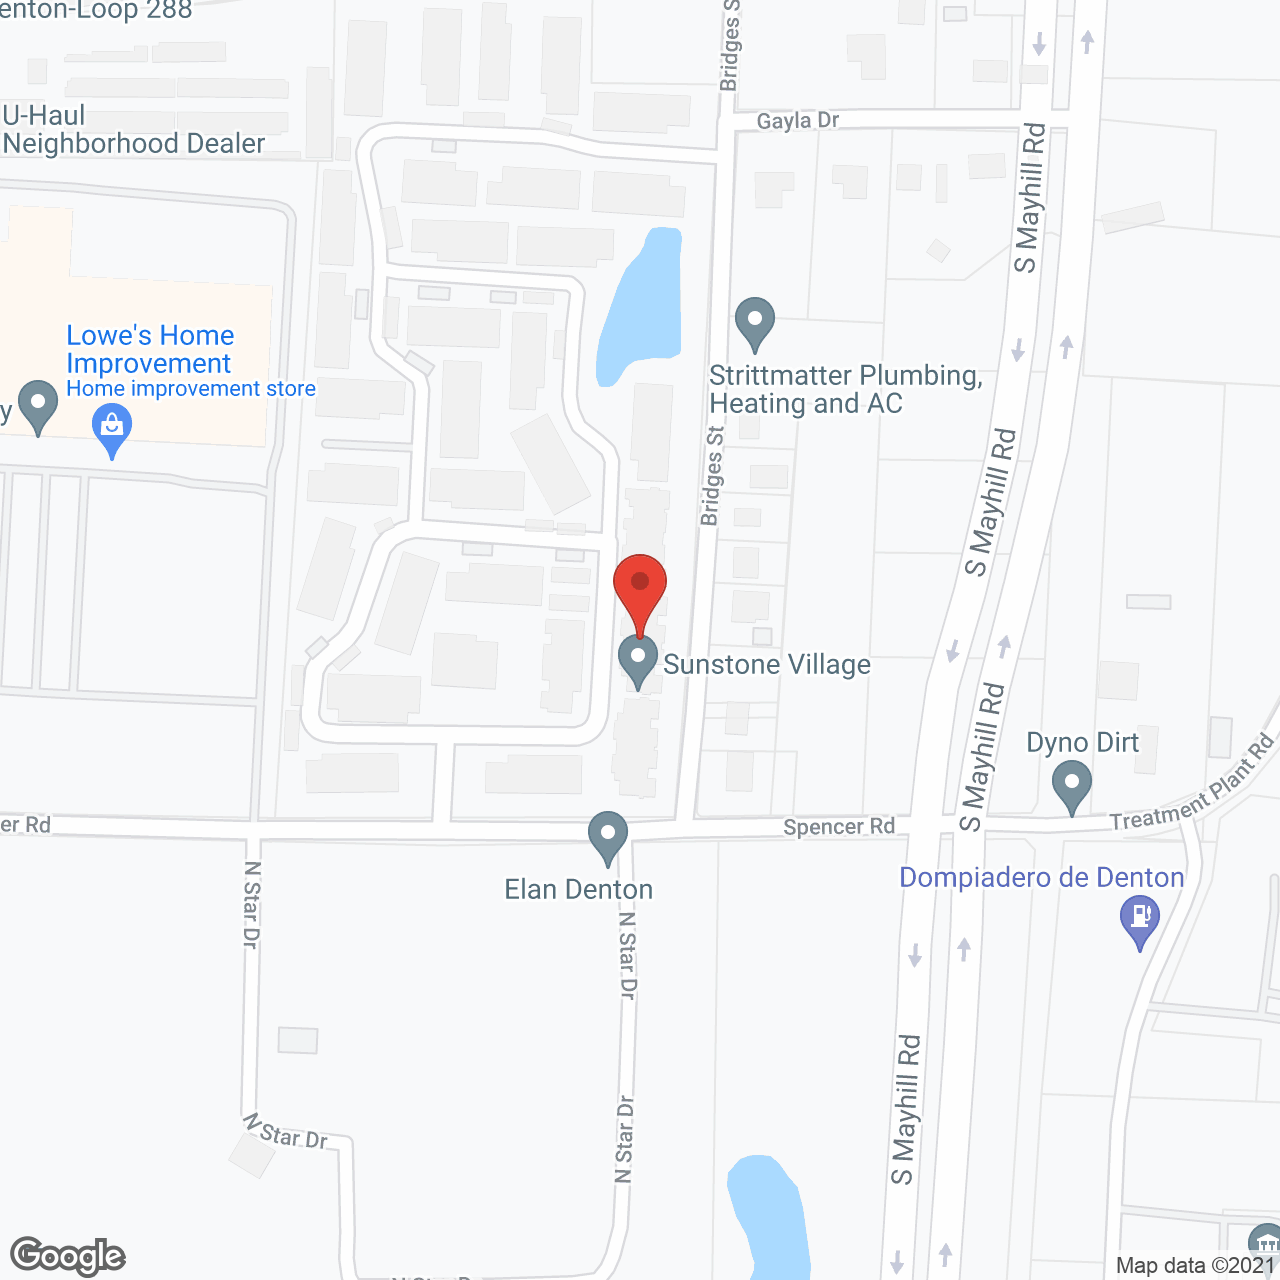 Sunstone Village in google map